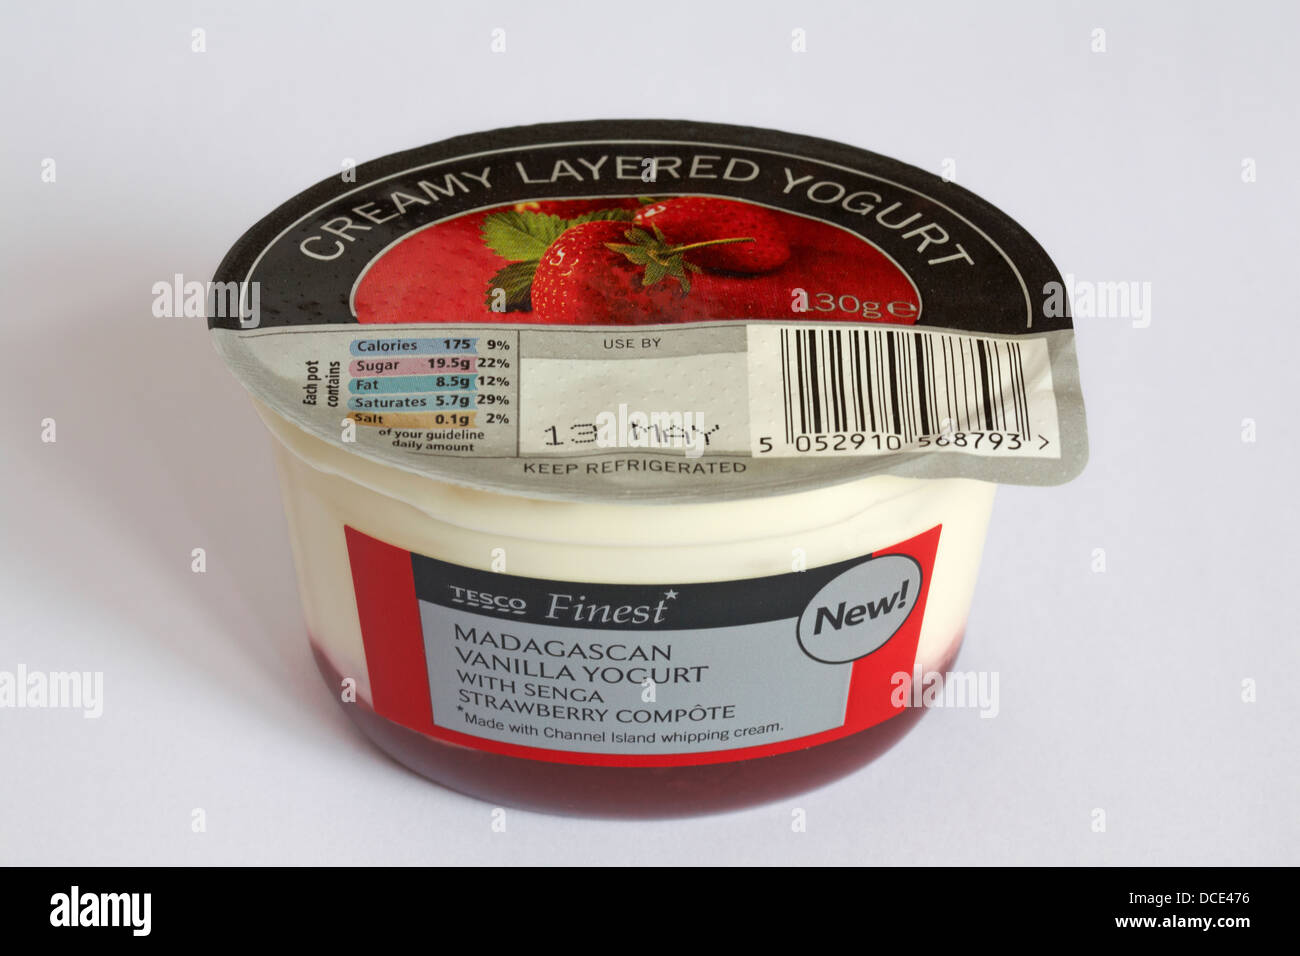 Tesco Finest creamy layered yogurt Madagascan vanilla yogurt with senga strawberry compote isolated on white background Stock Photo